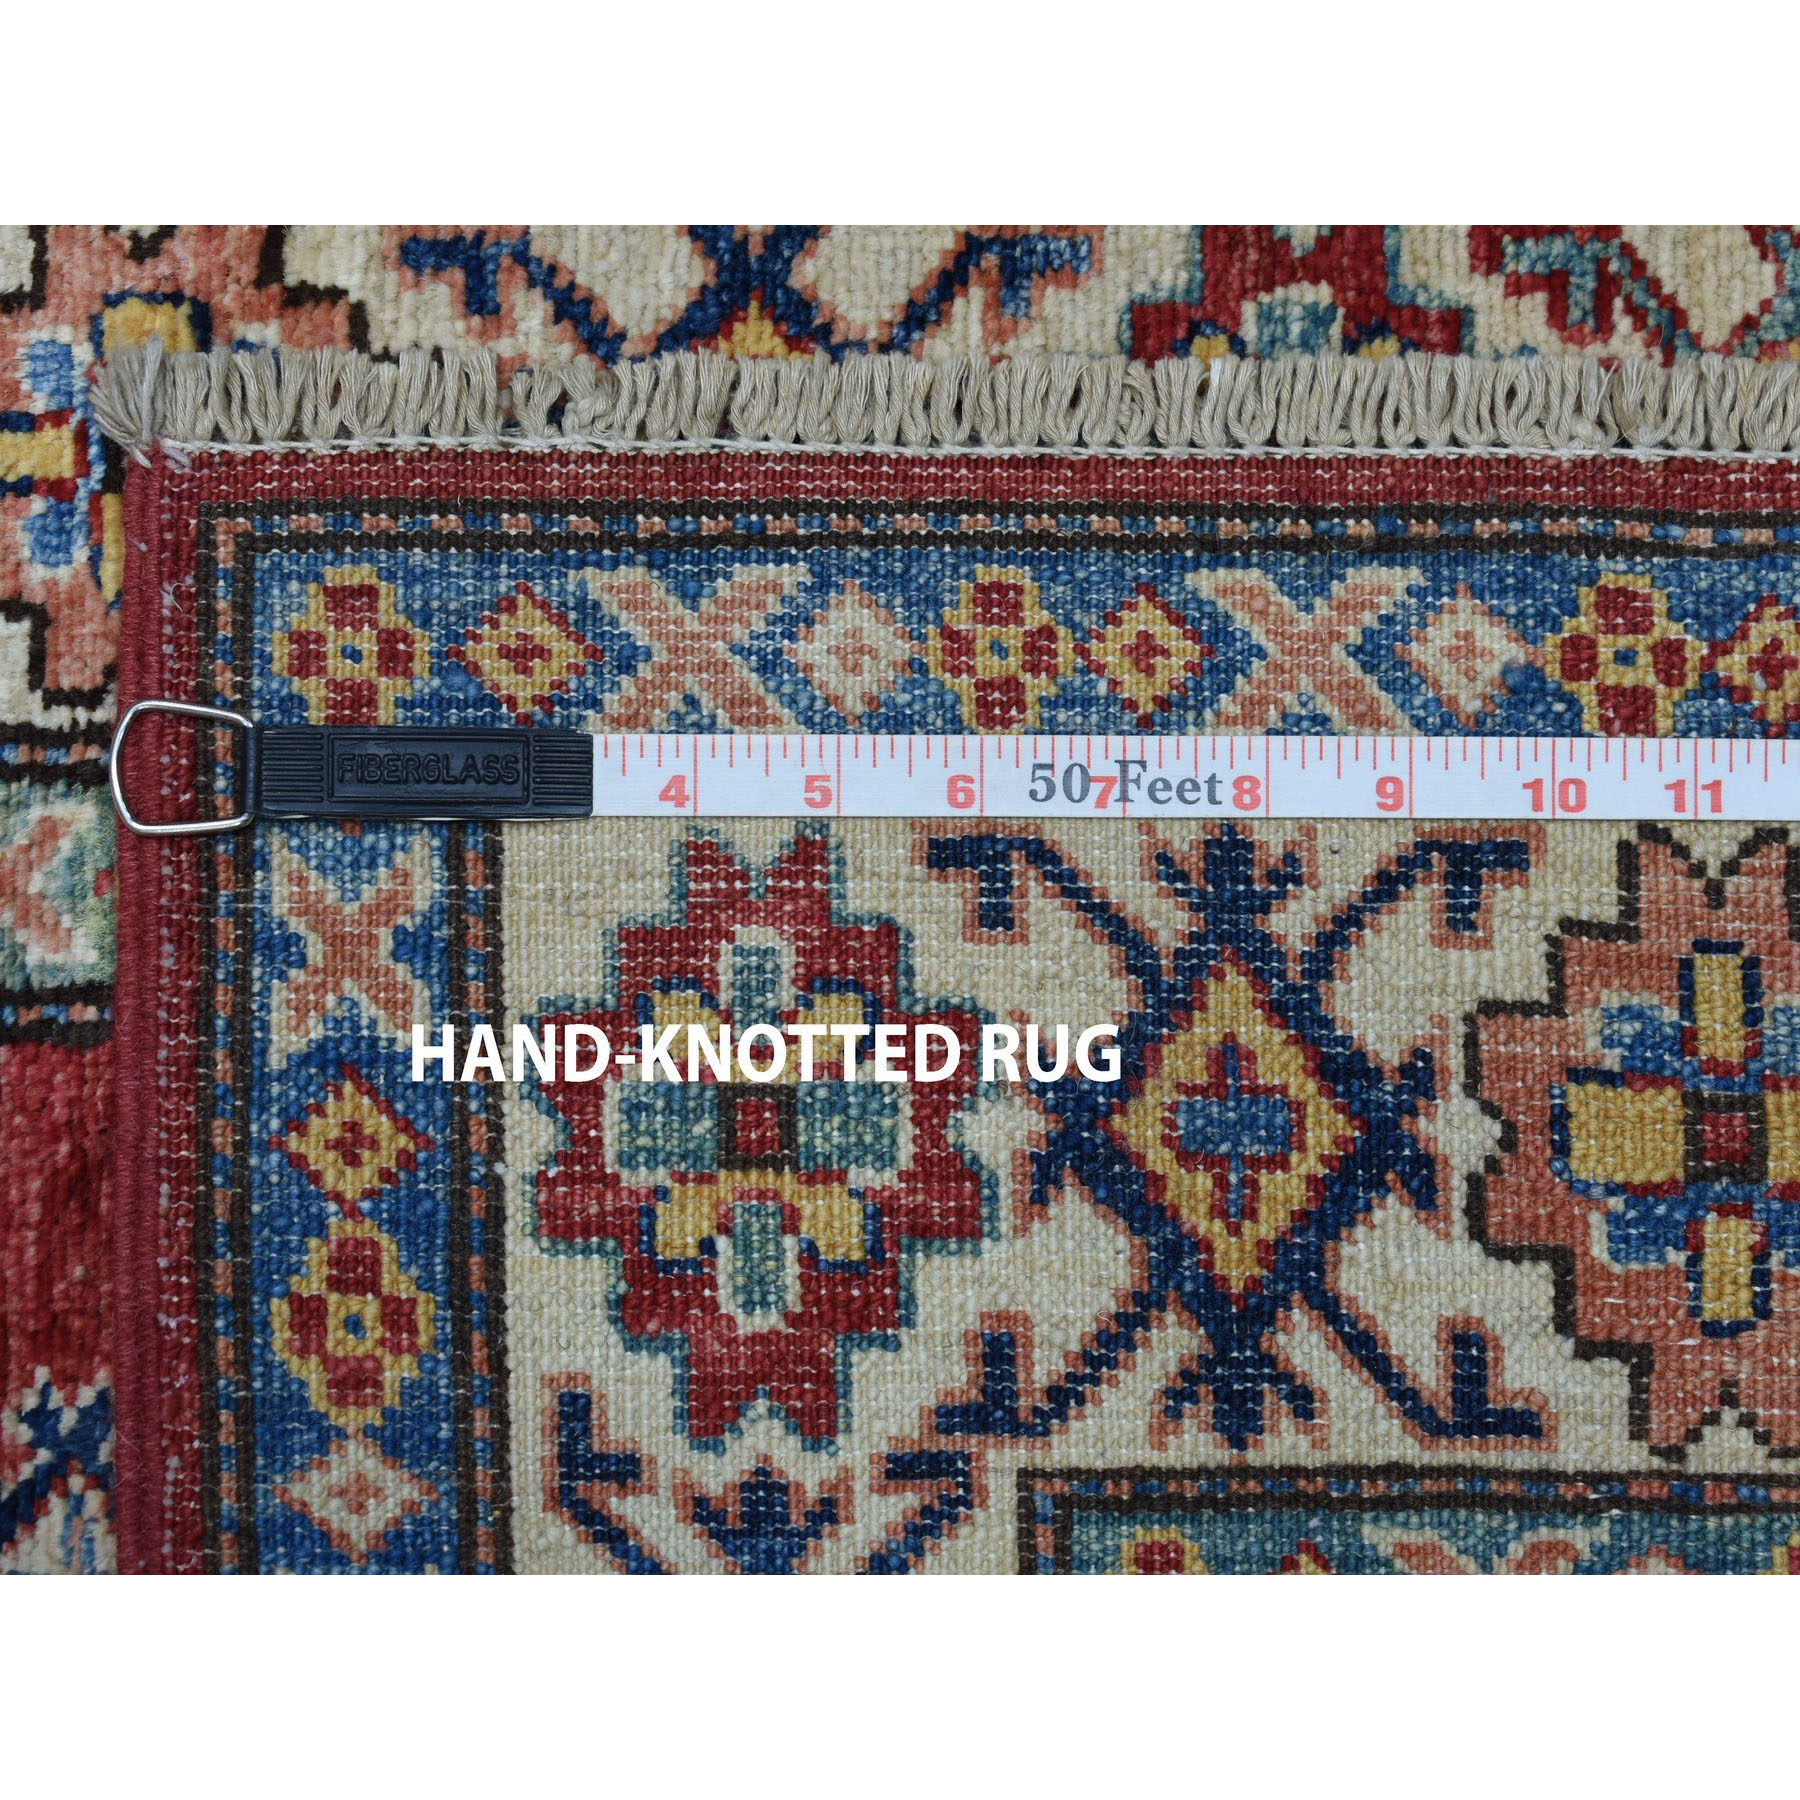 2-7 x19-9  Red Super Kazak Geometric Design XL Runner Pure Wool Hand-Knotted Oriental Rug 